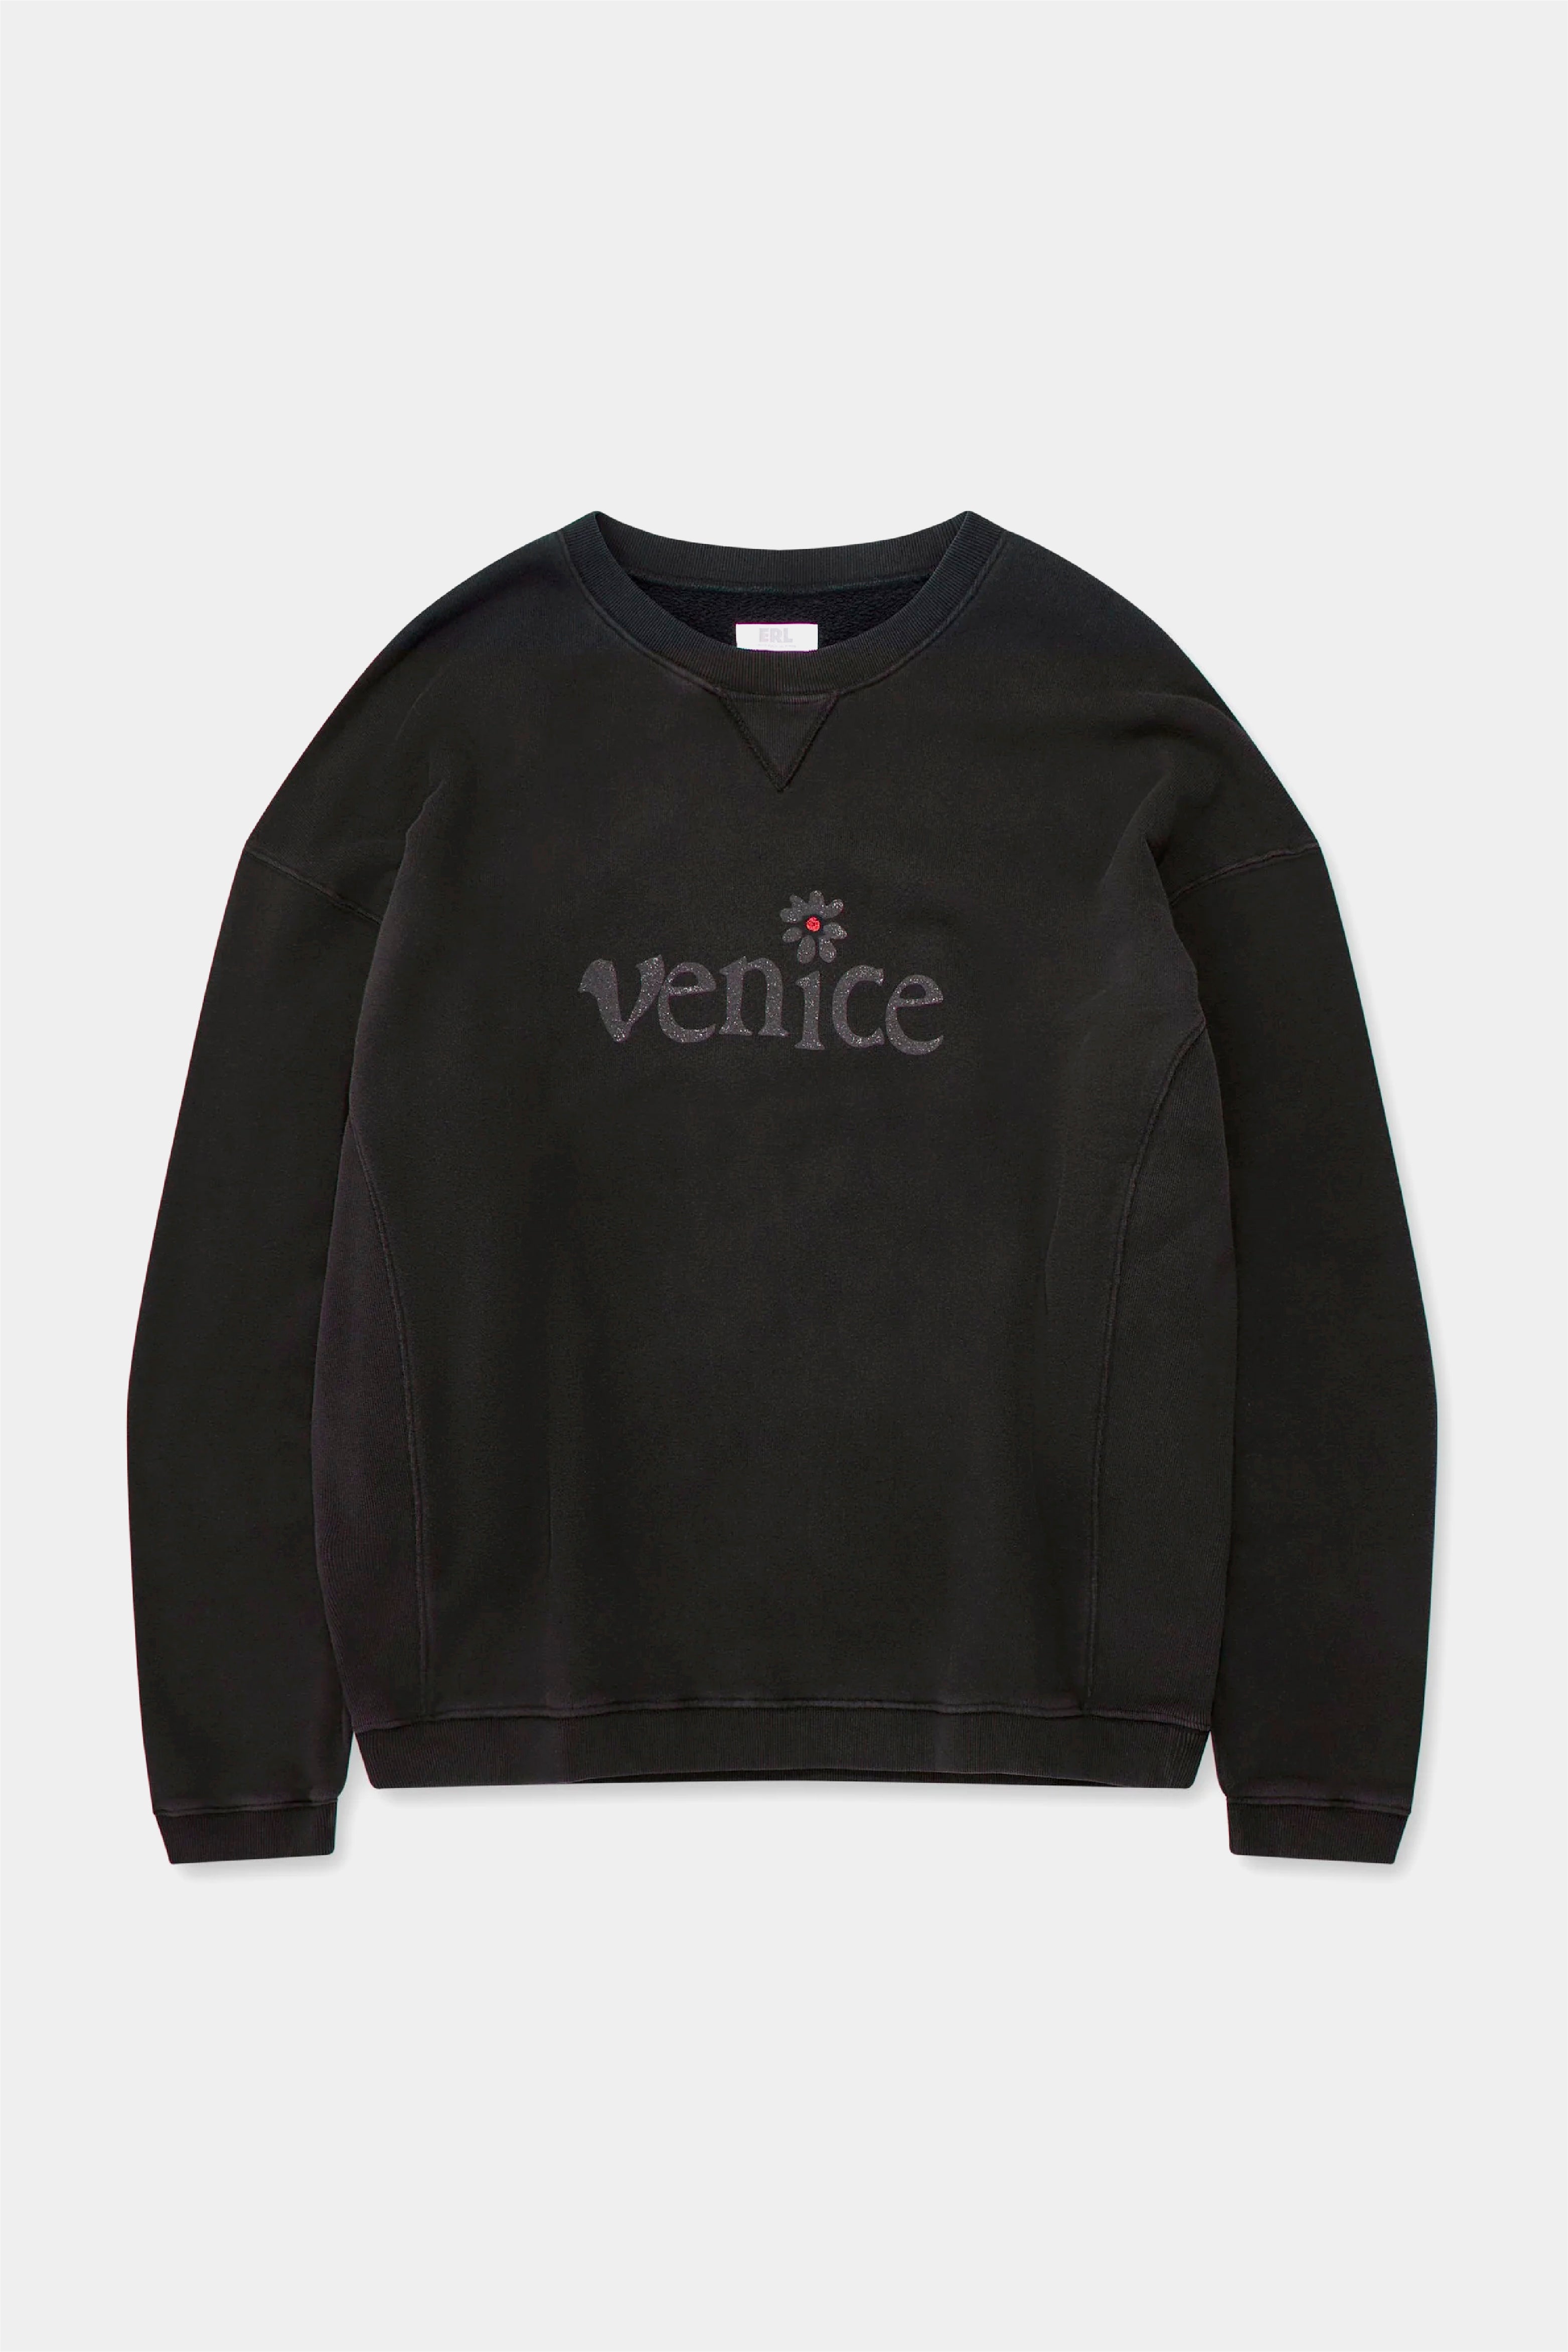 Selectshop FRAME - ERL Venice Crew Neck Premium Fleece Sweatshirt Sweats-Knits Concept Store Dubai